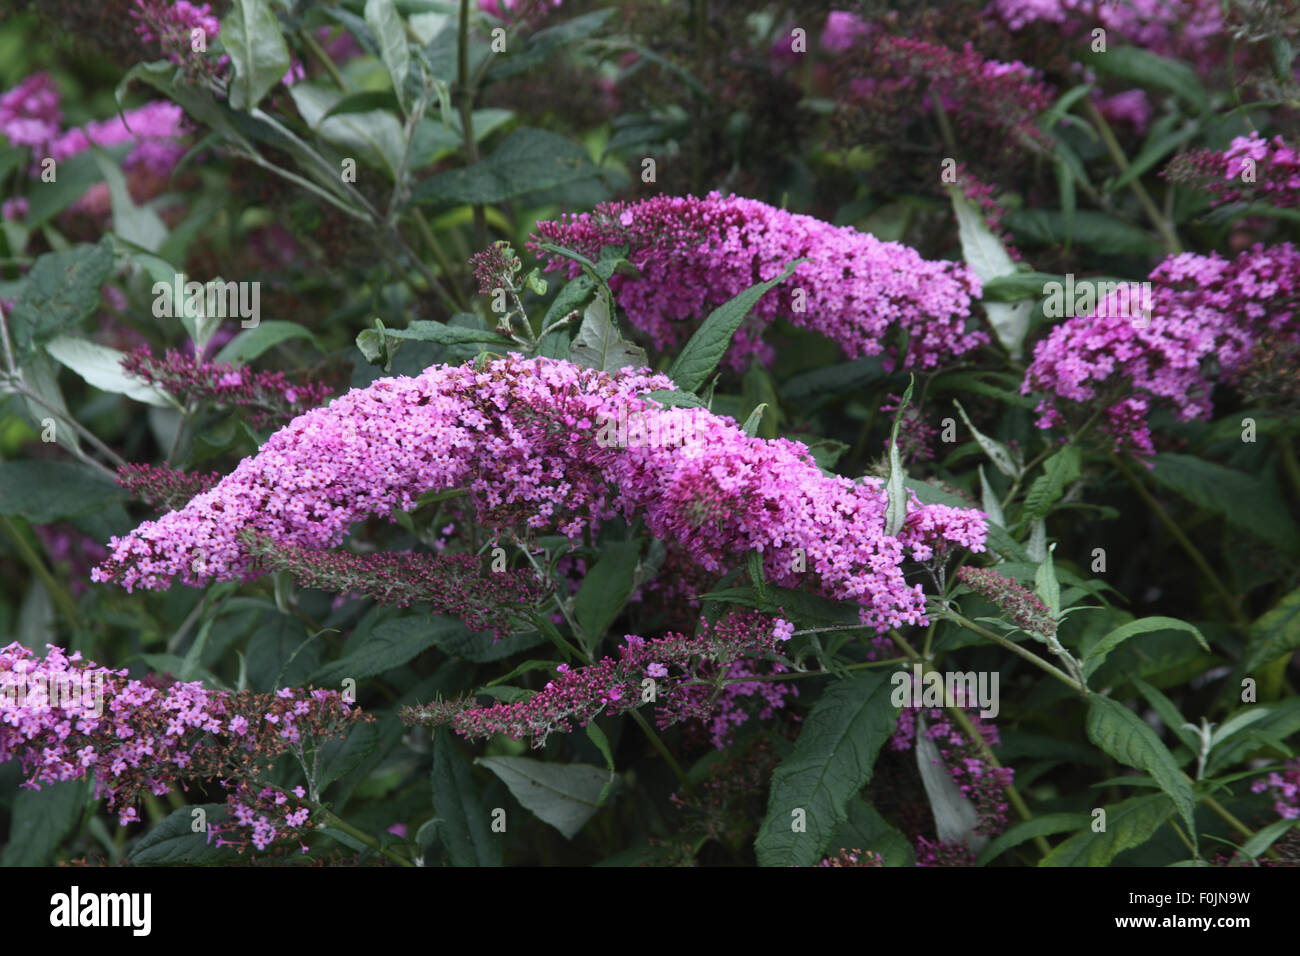 Buddleja davidii 'Pink Delight' shrub in flower close up Stock Photo